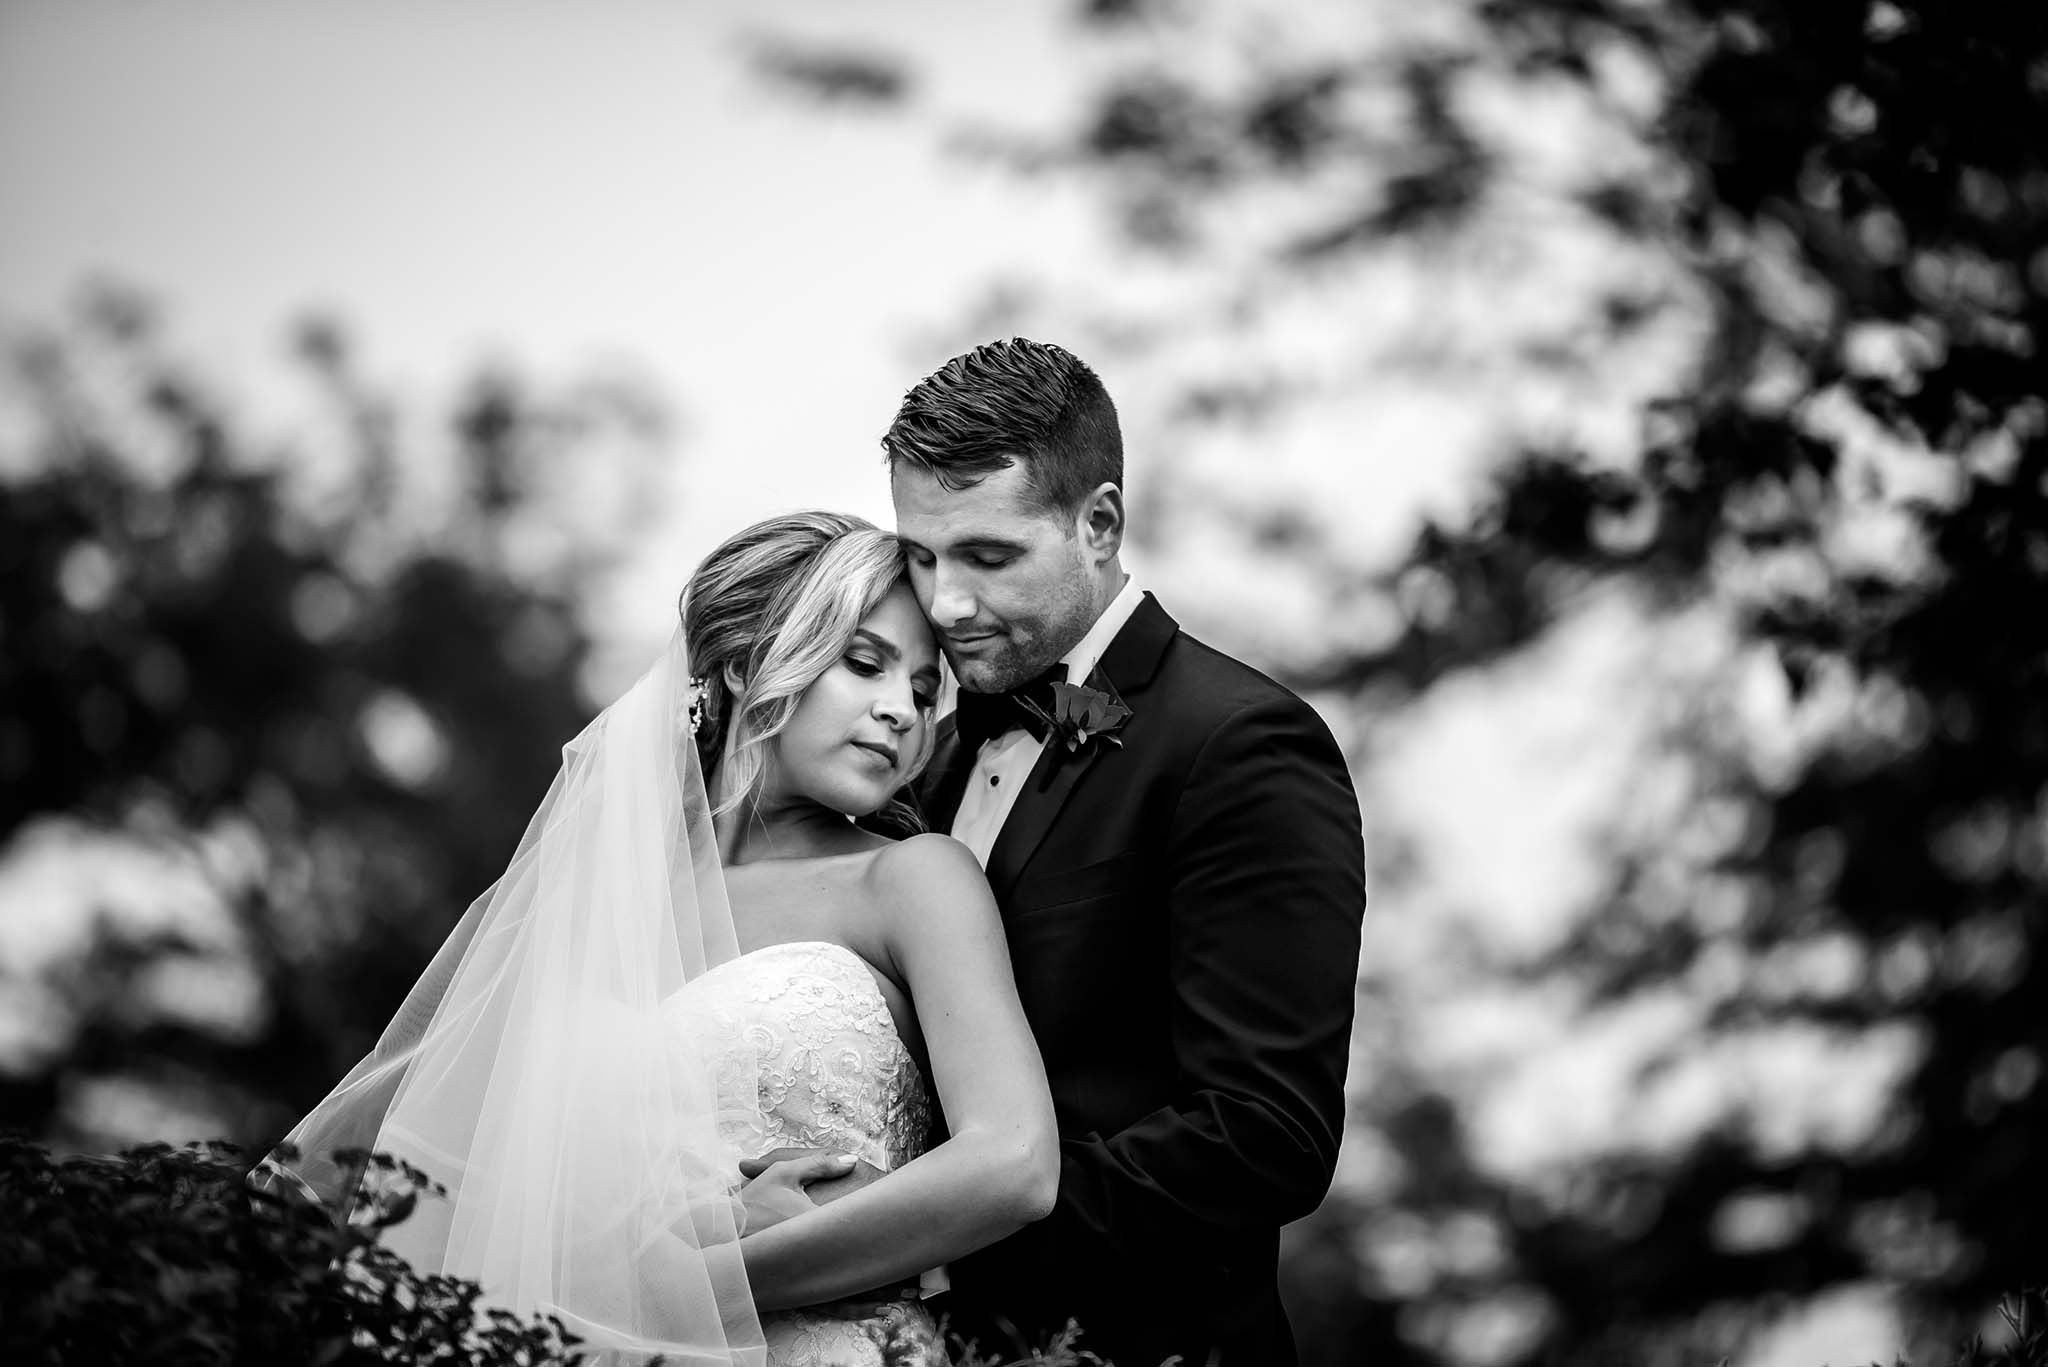 Wheeling wedding photographer – Chicago